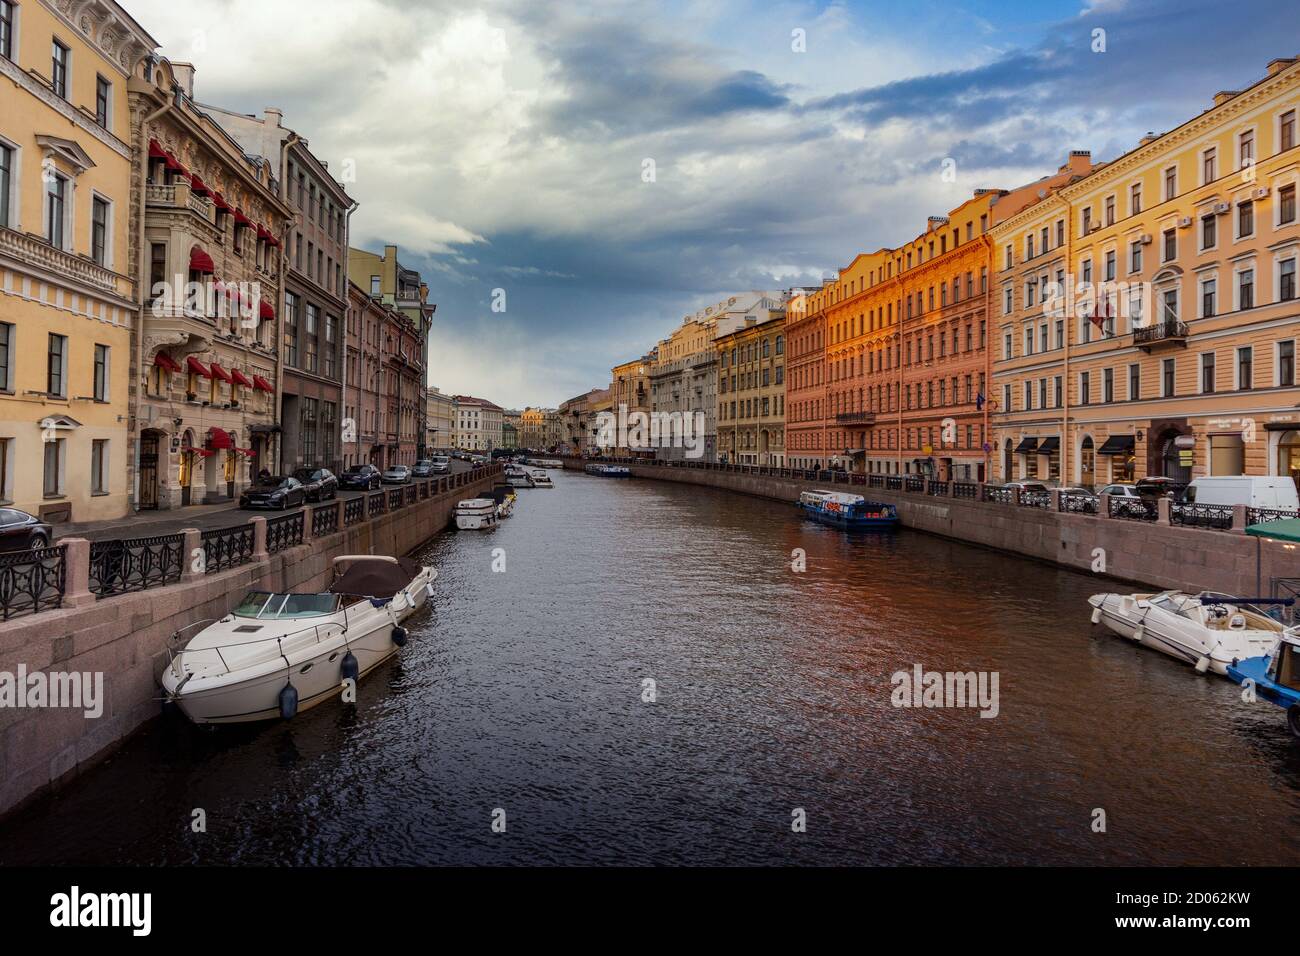 St.Peterburg. Russia. River in Saint Petersburg Russia. Saint Petersburg with its buildings. Stock Photo